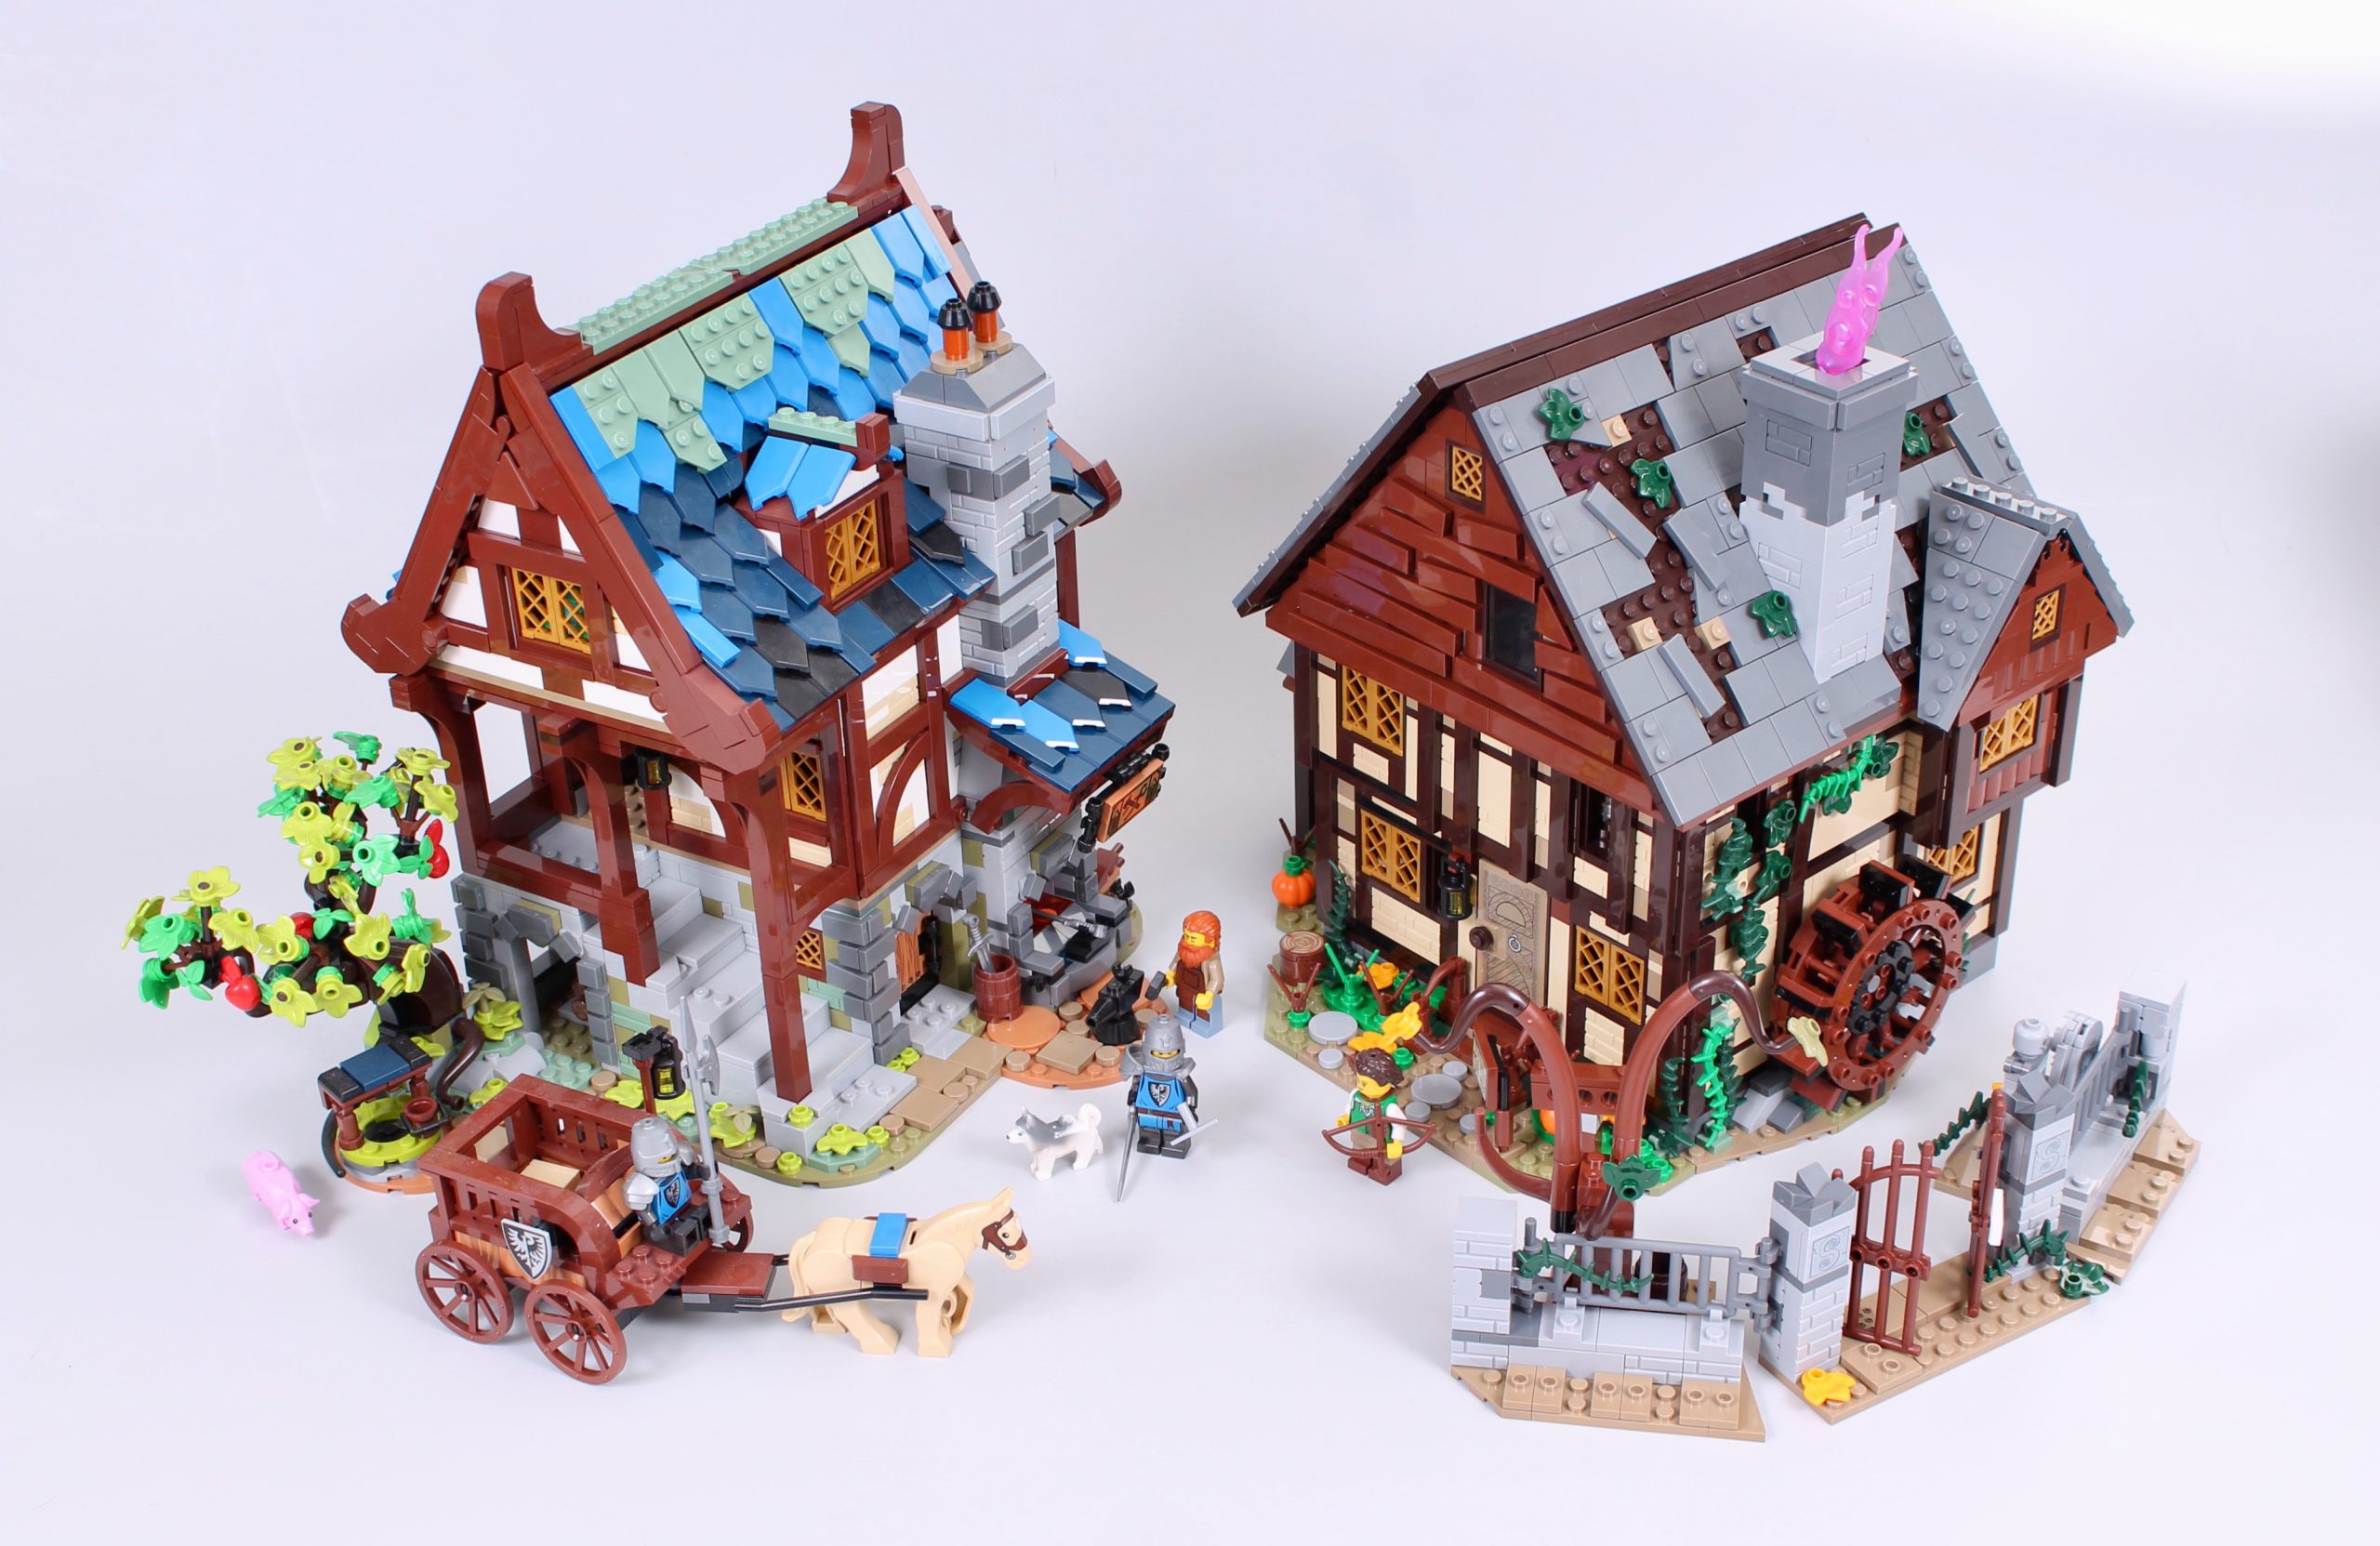 LEGO Hocus Pocus pairs perfectly with Medieval Blacksmith